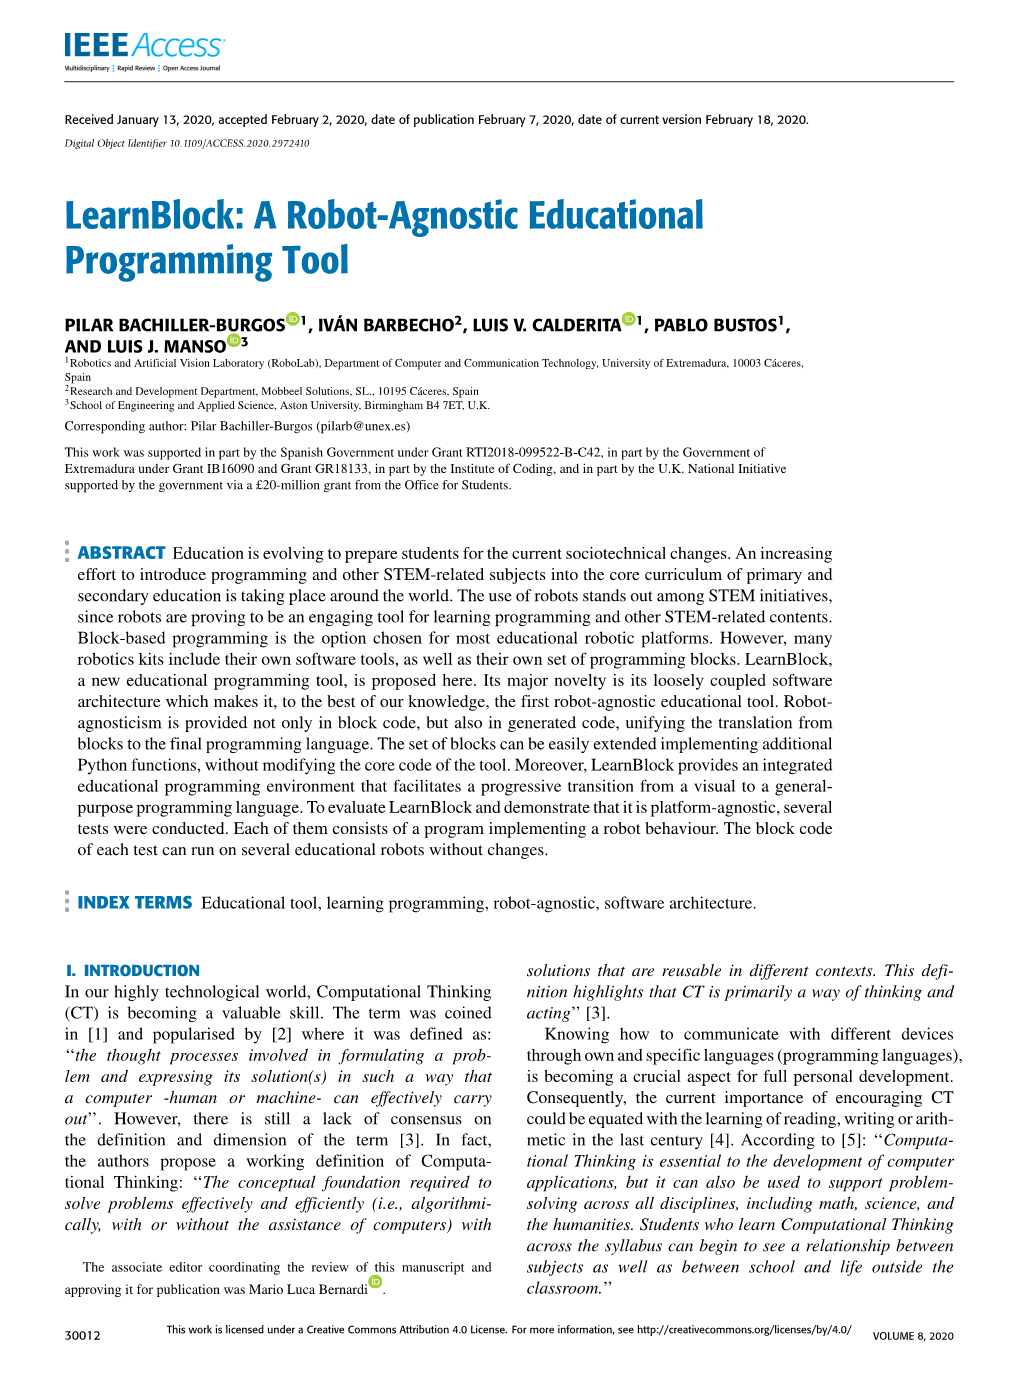 Learnblock: a Robot-Agnostic Educational Programming Tool